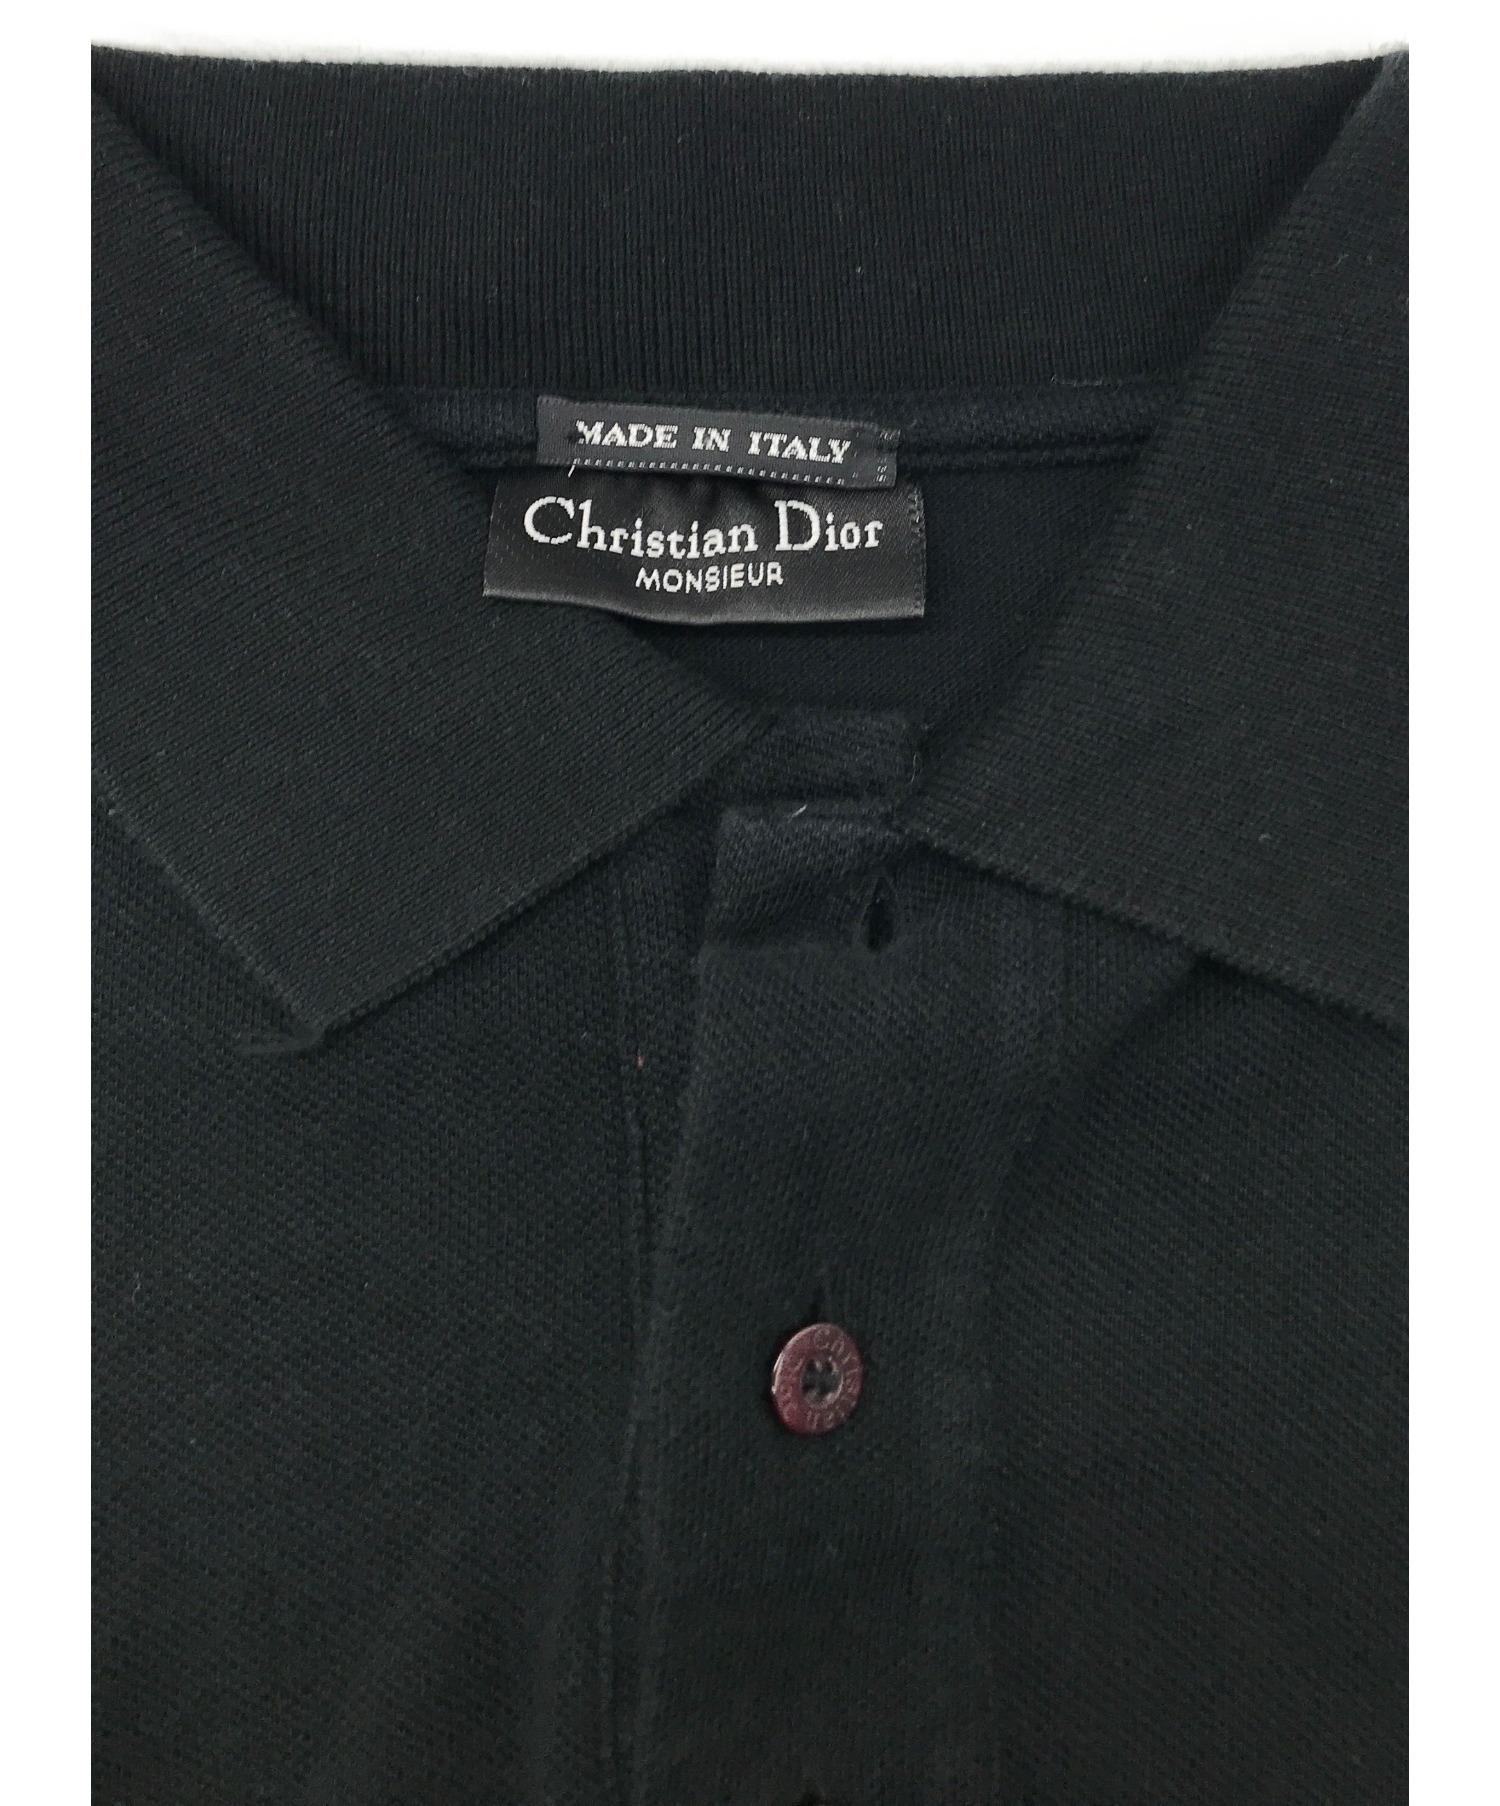 Christian Dior MONSIEUR (クリスチャンディオールムッシュ) 刺繍ロゴポロシャツ ブラック サイズ:SIZE M